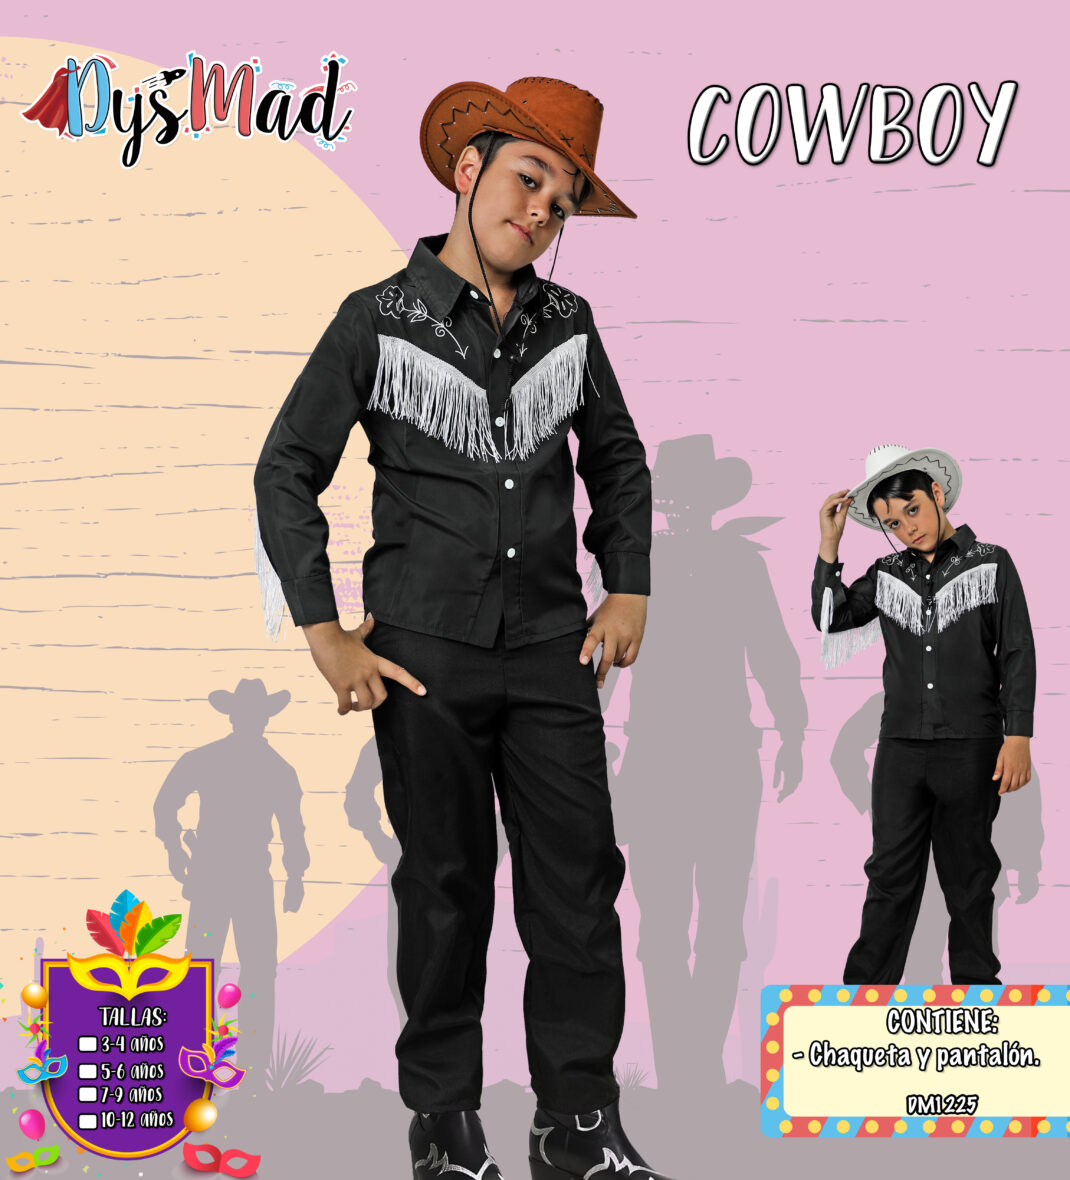 064_Cowboy2